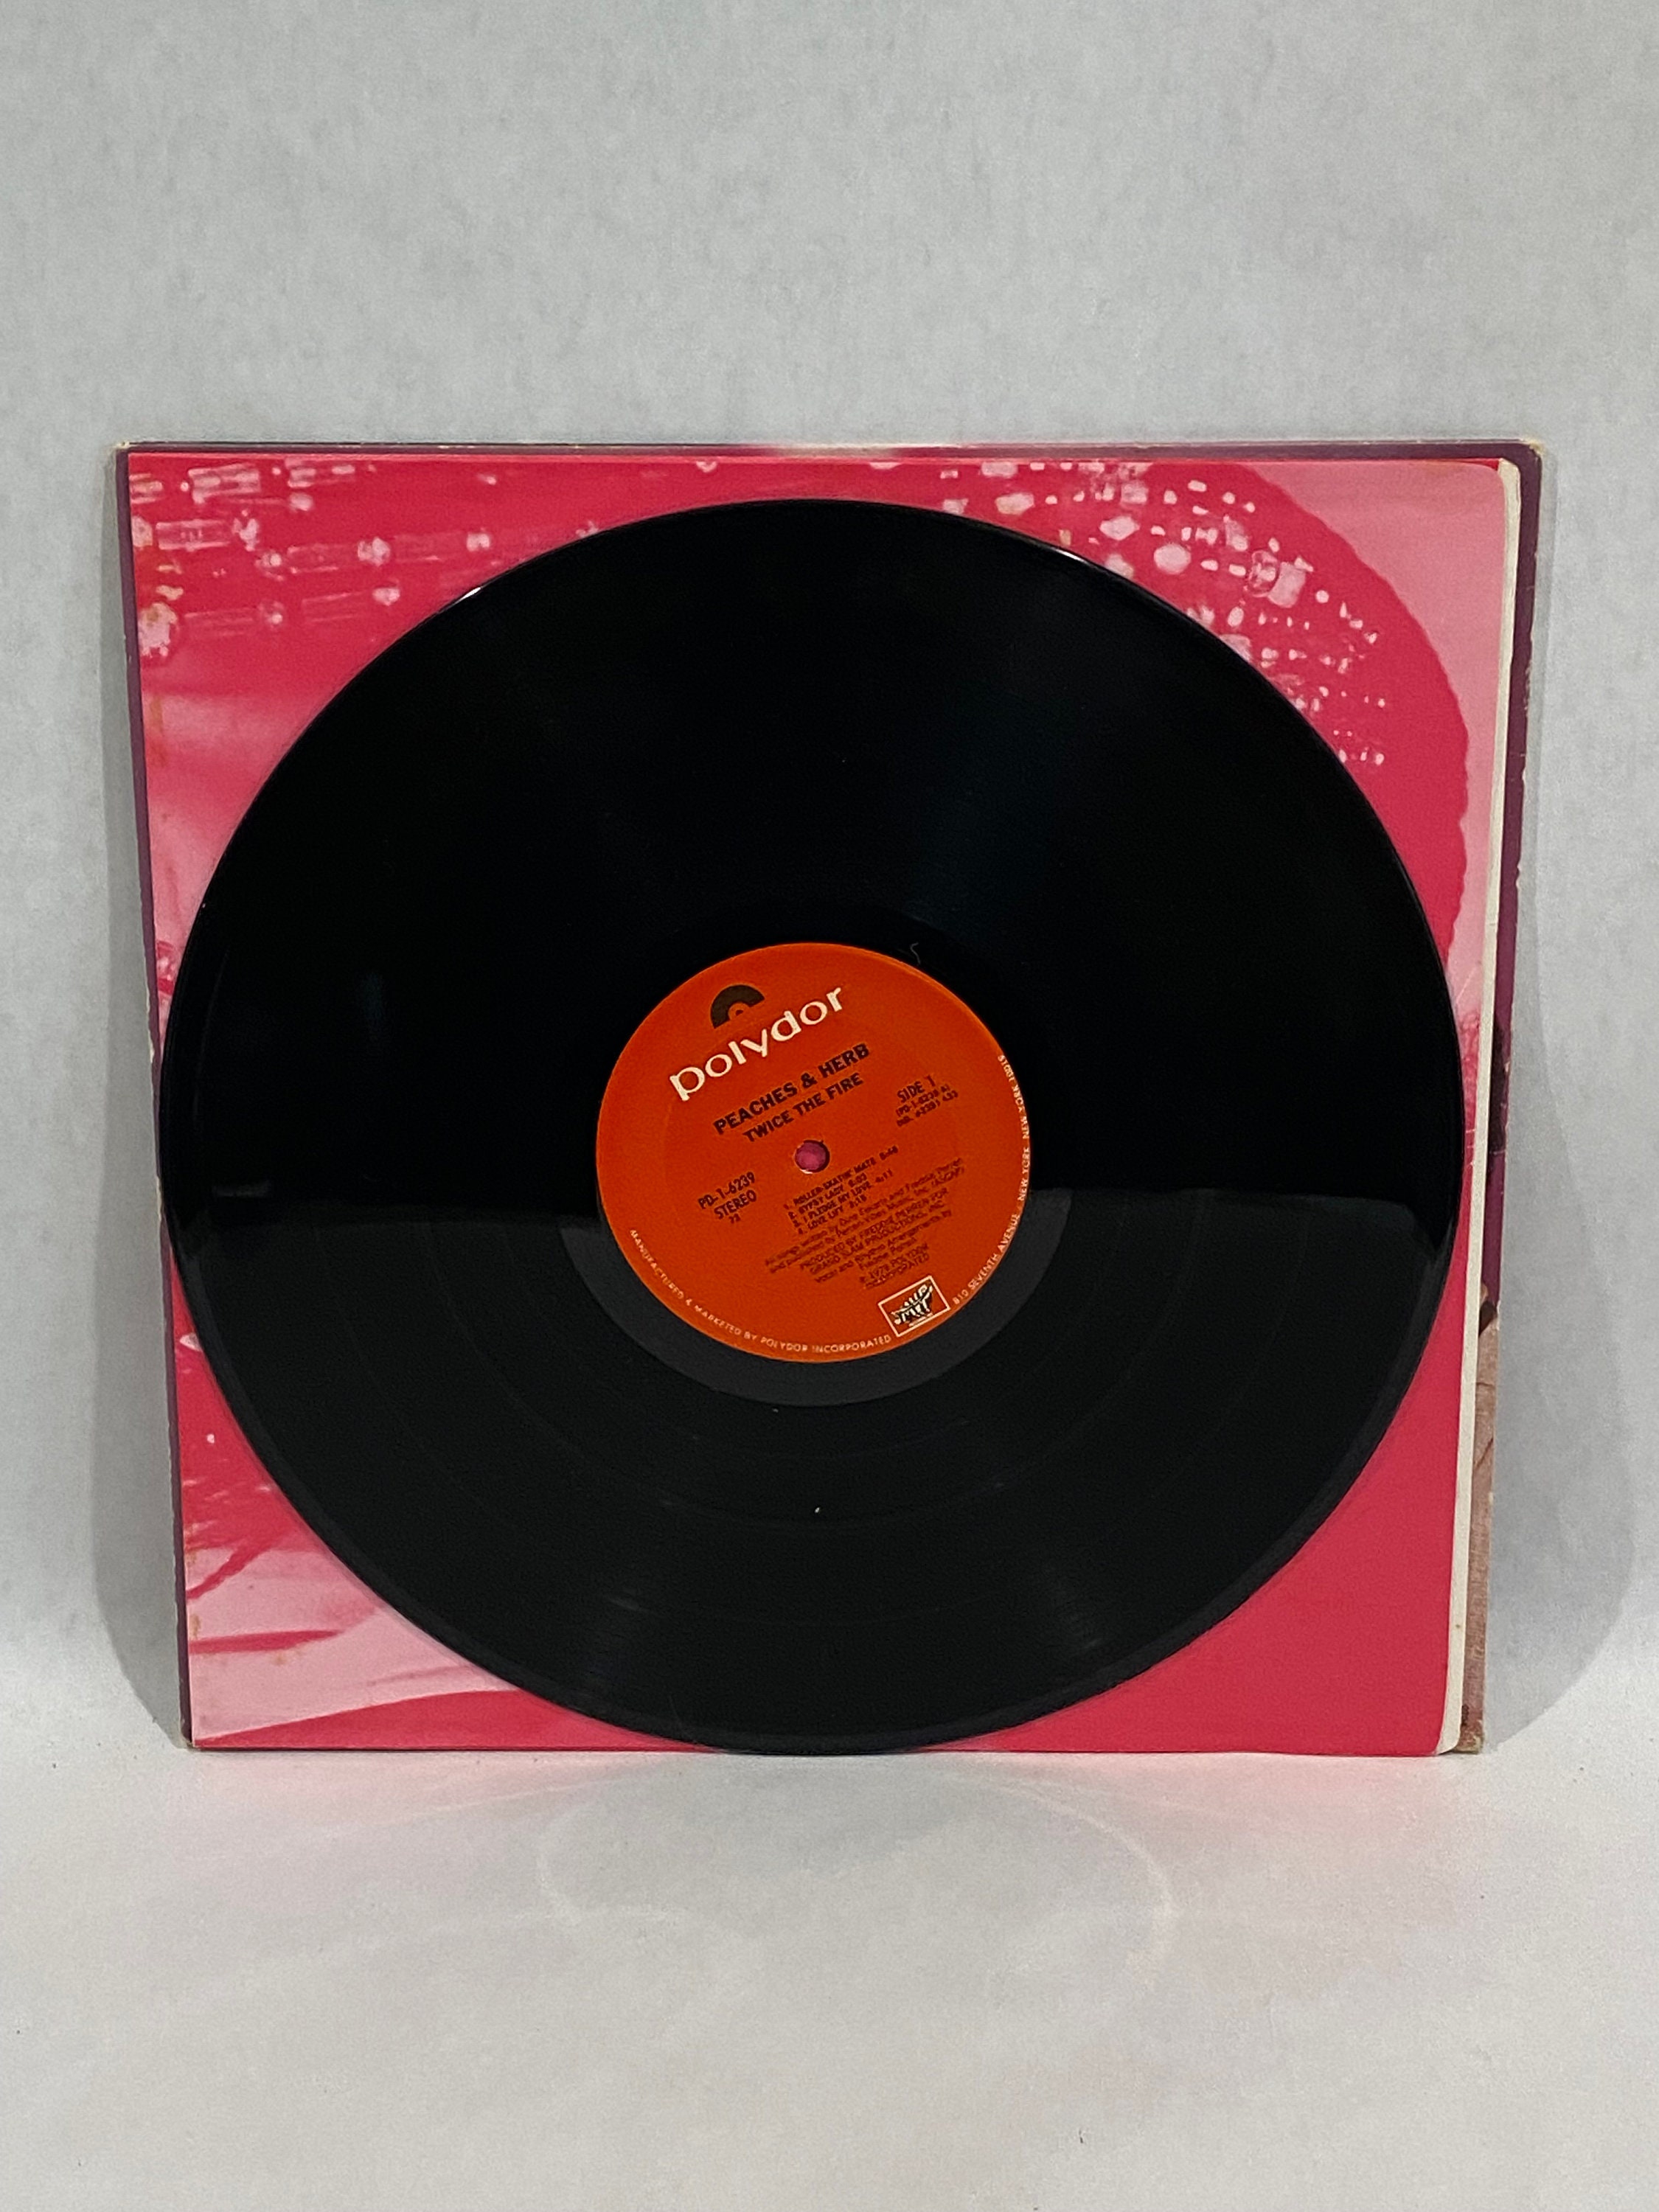 Vintage Vinyl Record Peaches & Herb: Twice the Fire Album 